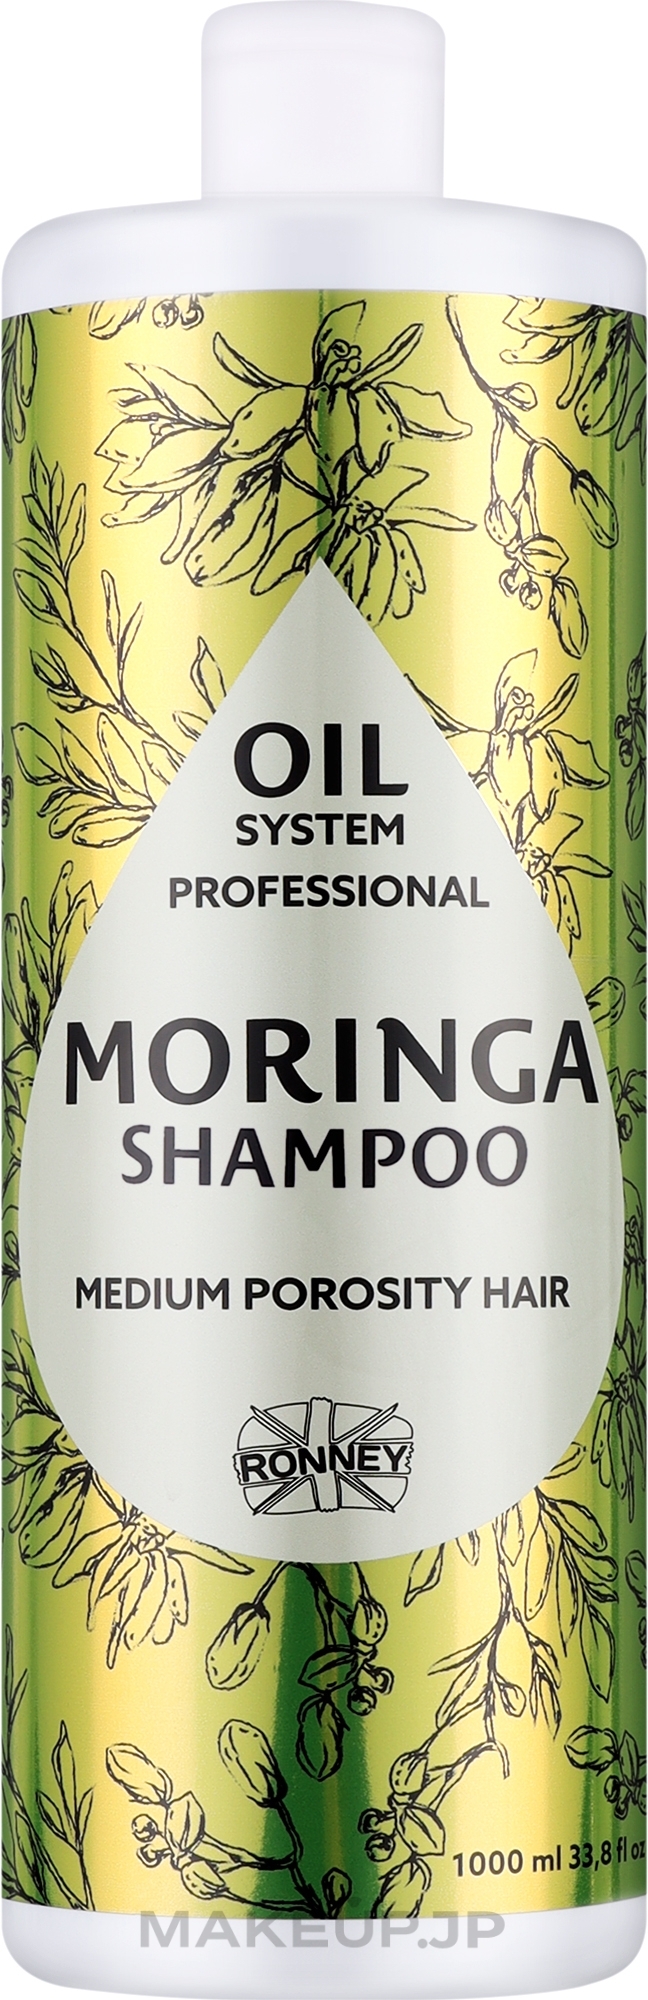 Moringa Oil Shampoo for Medium Porous Hair - Ronney Professional Oil System Medium Porosity Hair Moringa Shampoo	 — photo 1000 ml